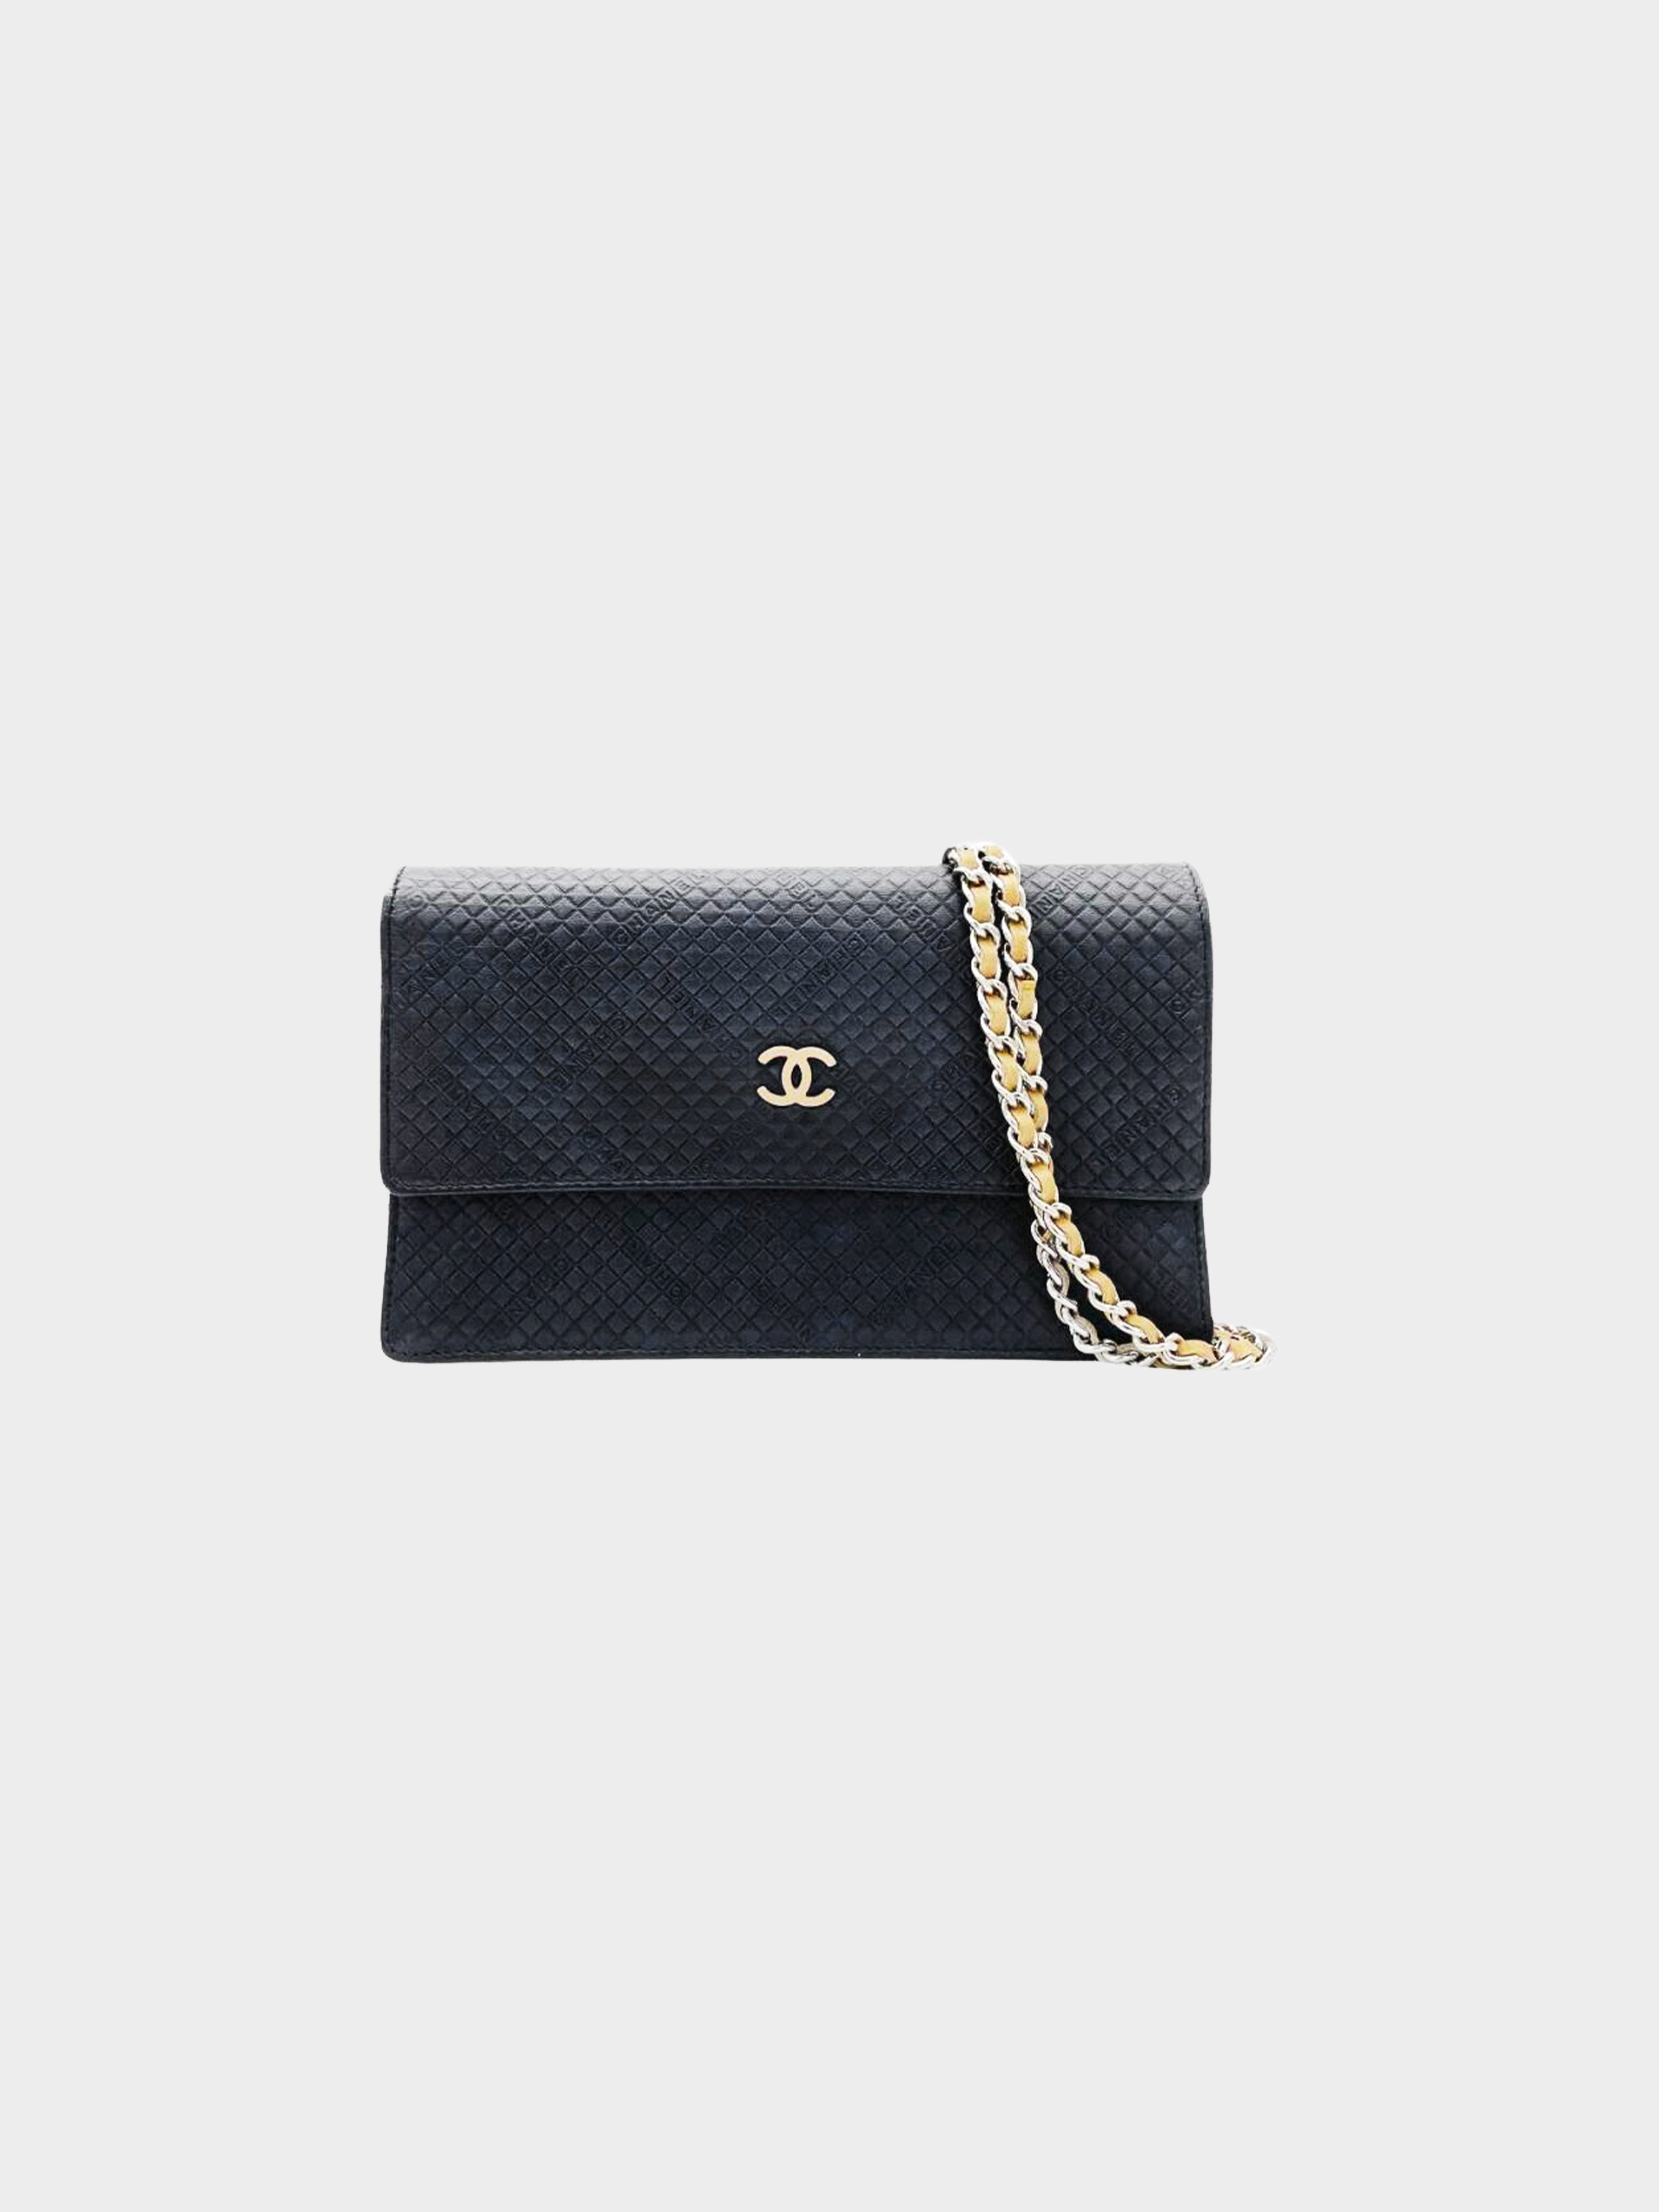 Chanel Vintage WOC Wallet On Chain Black Caviar